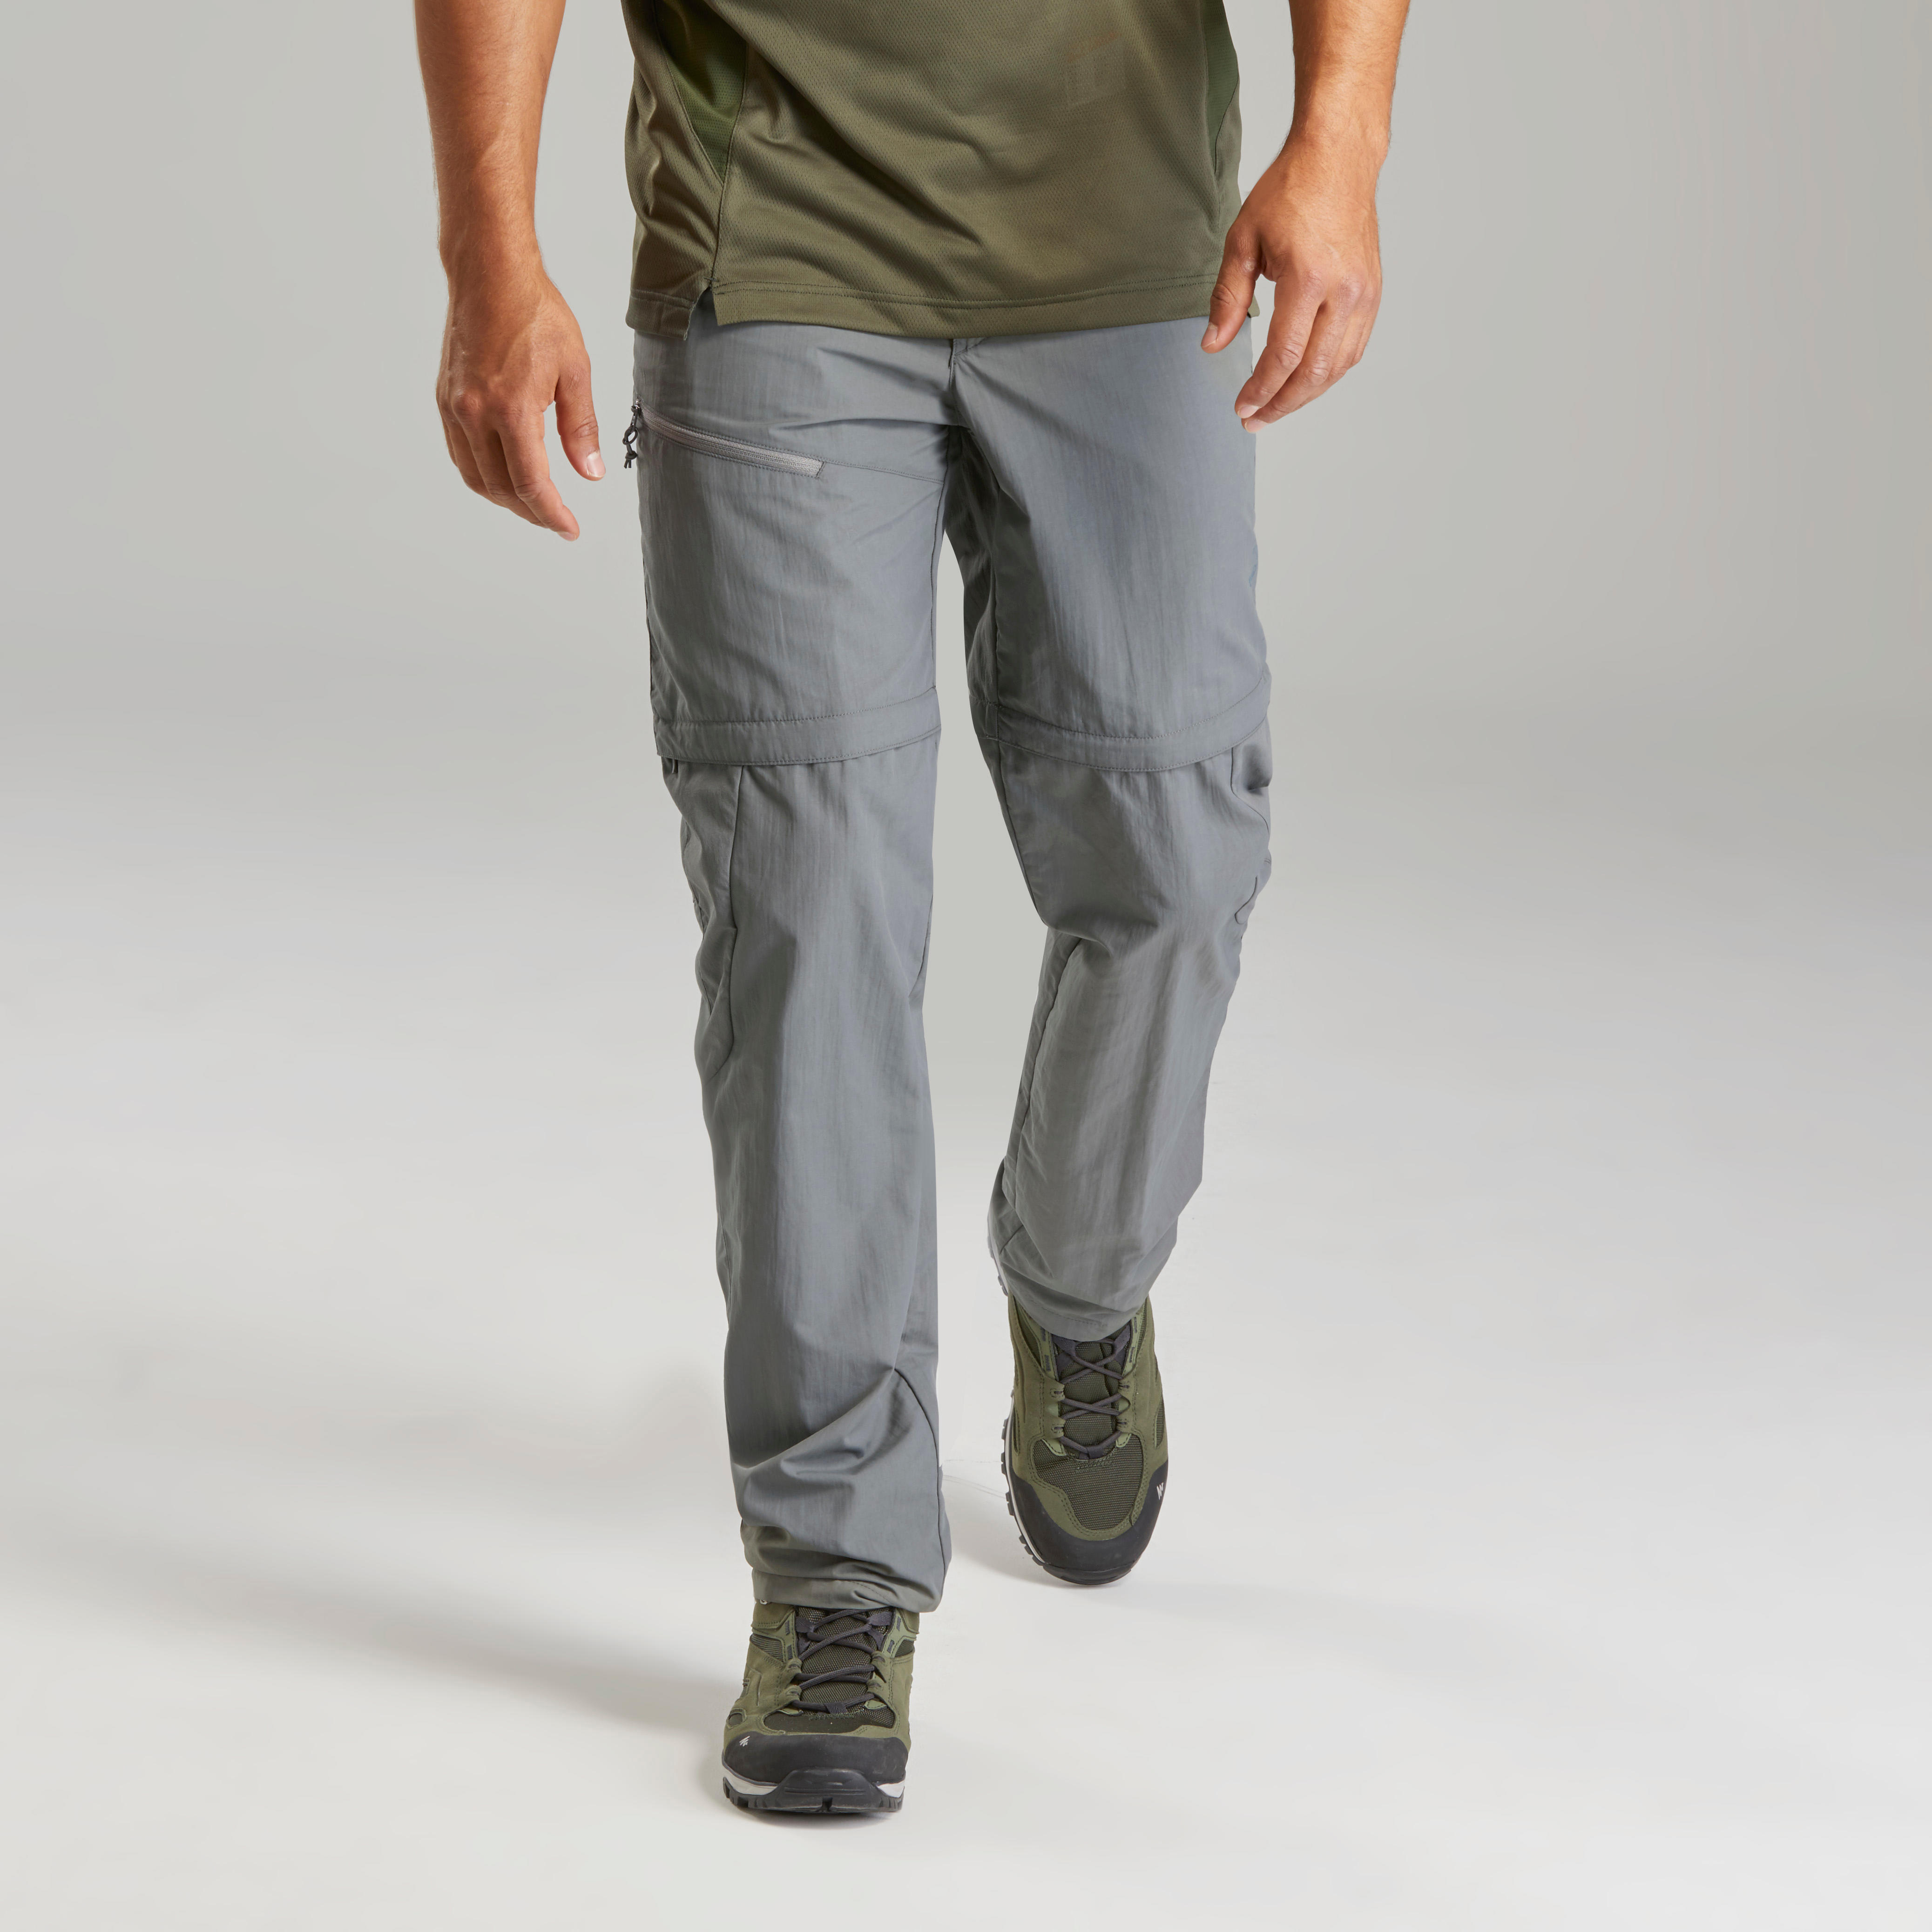 FORCLAZ - Men's Mountain Trekking Trousers -TREK 500 – CÔNG TY CỔ PHẦN DỆT  MAY 29/3